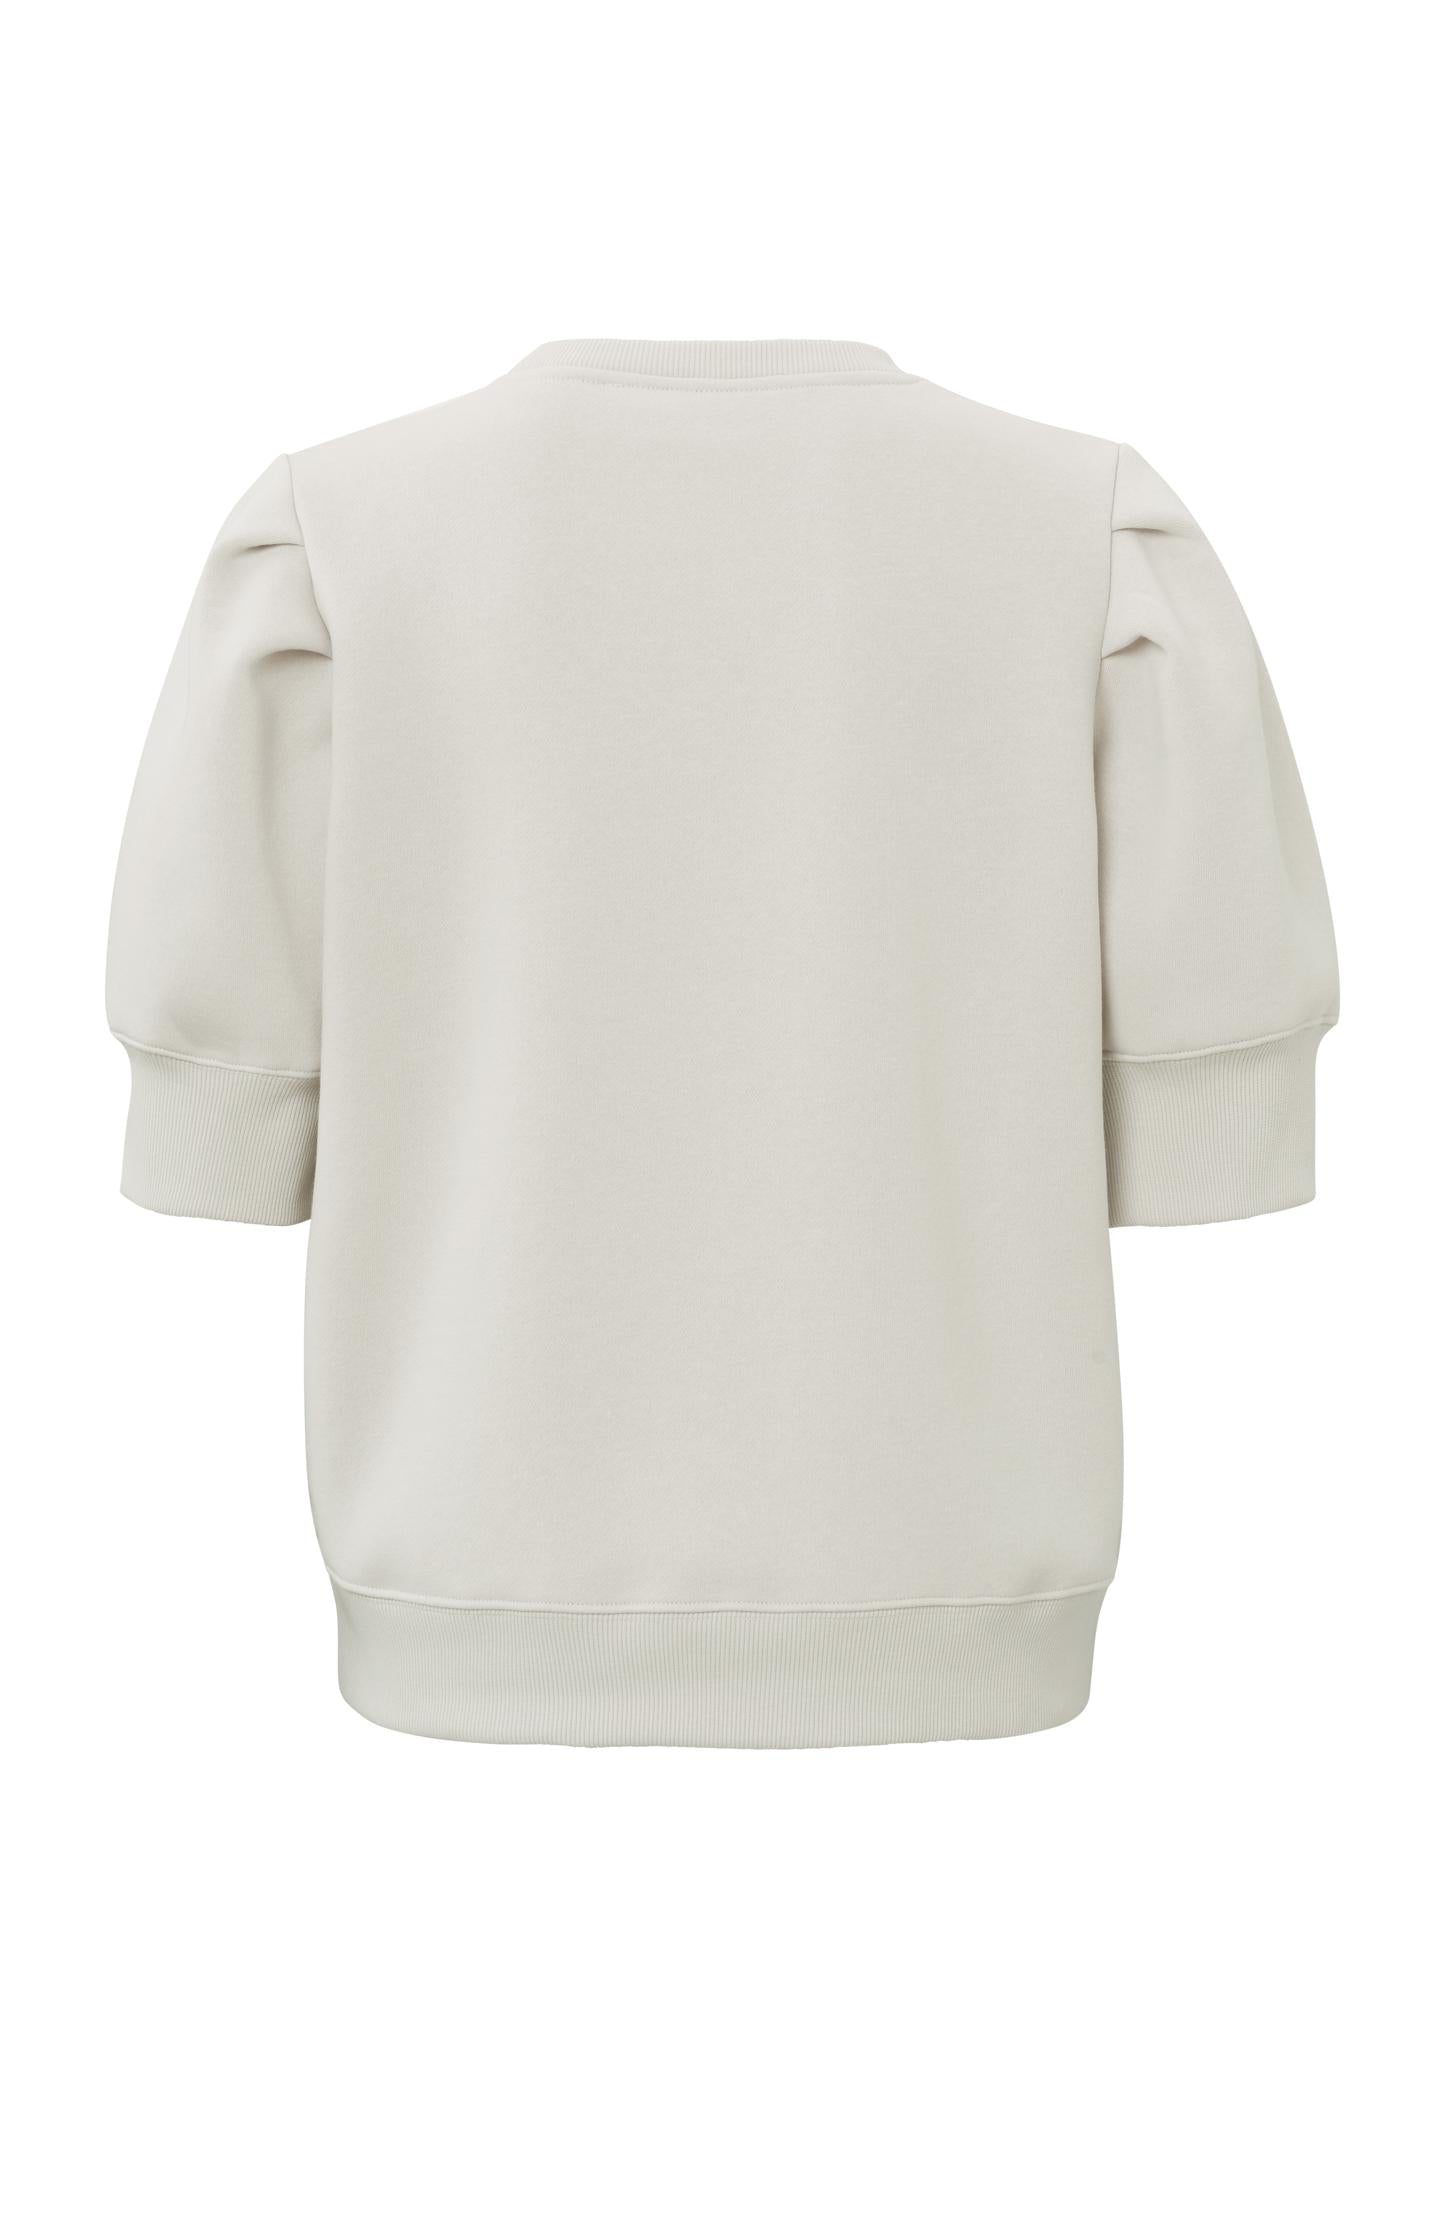 Sweatshirt with crewneck and mid-length, puffed sleeves